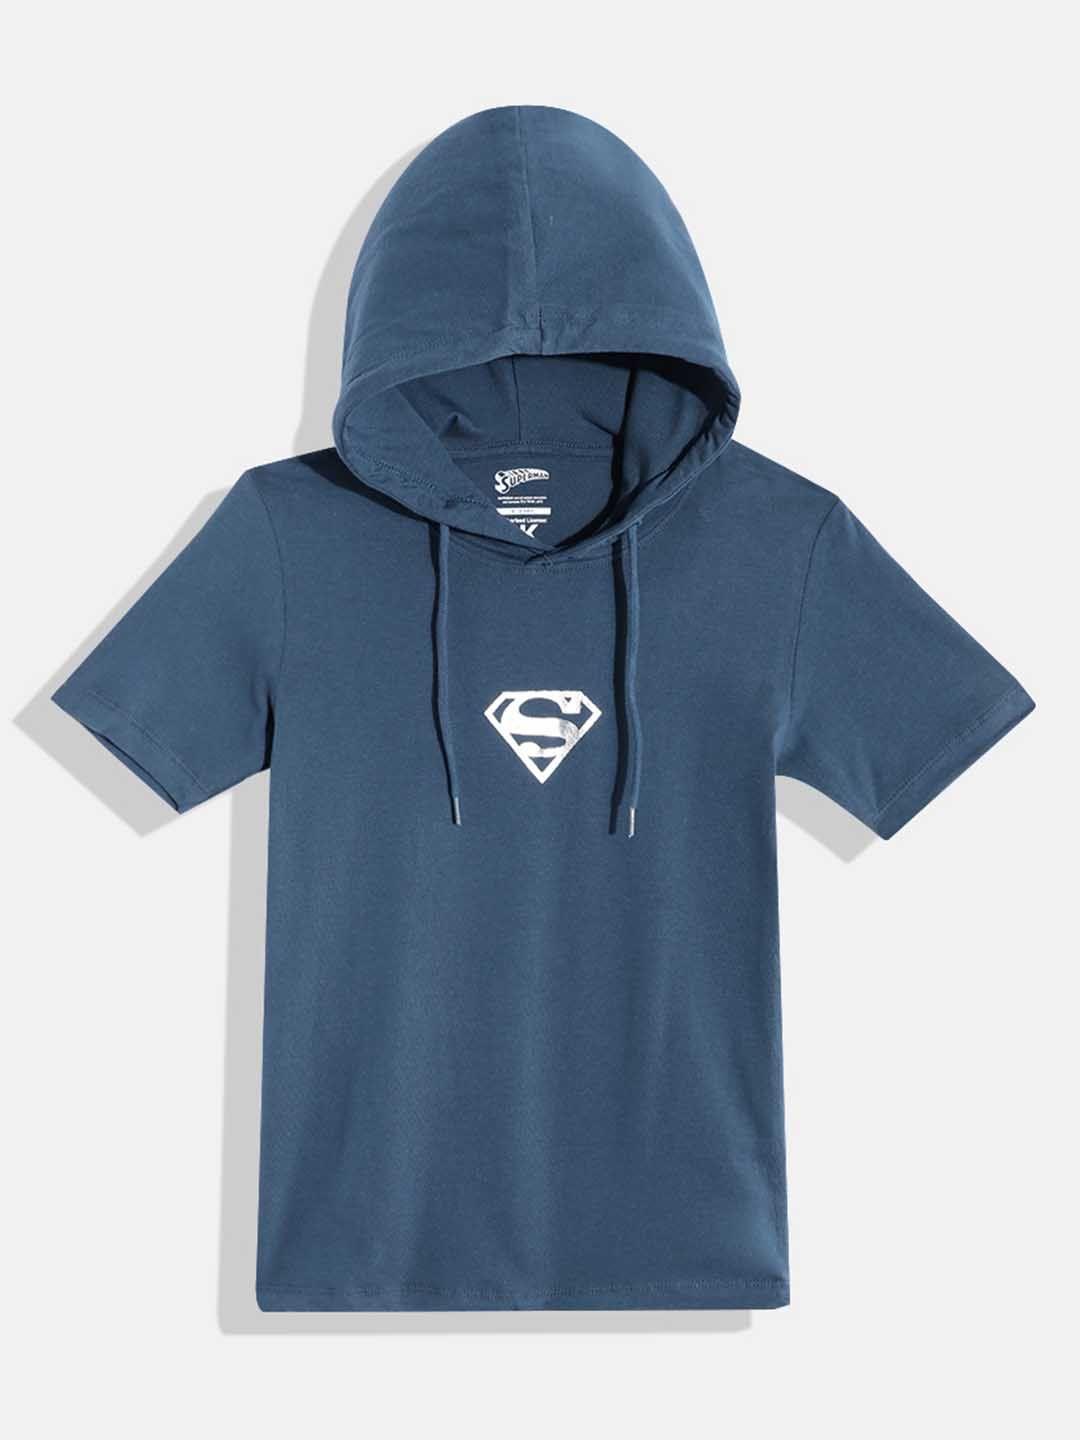 kook n keech marvel teens boys pure cotton superman printed hooded t-shirt